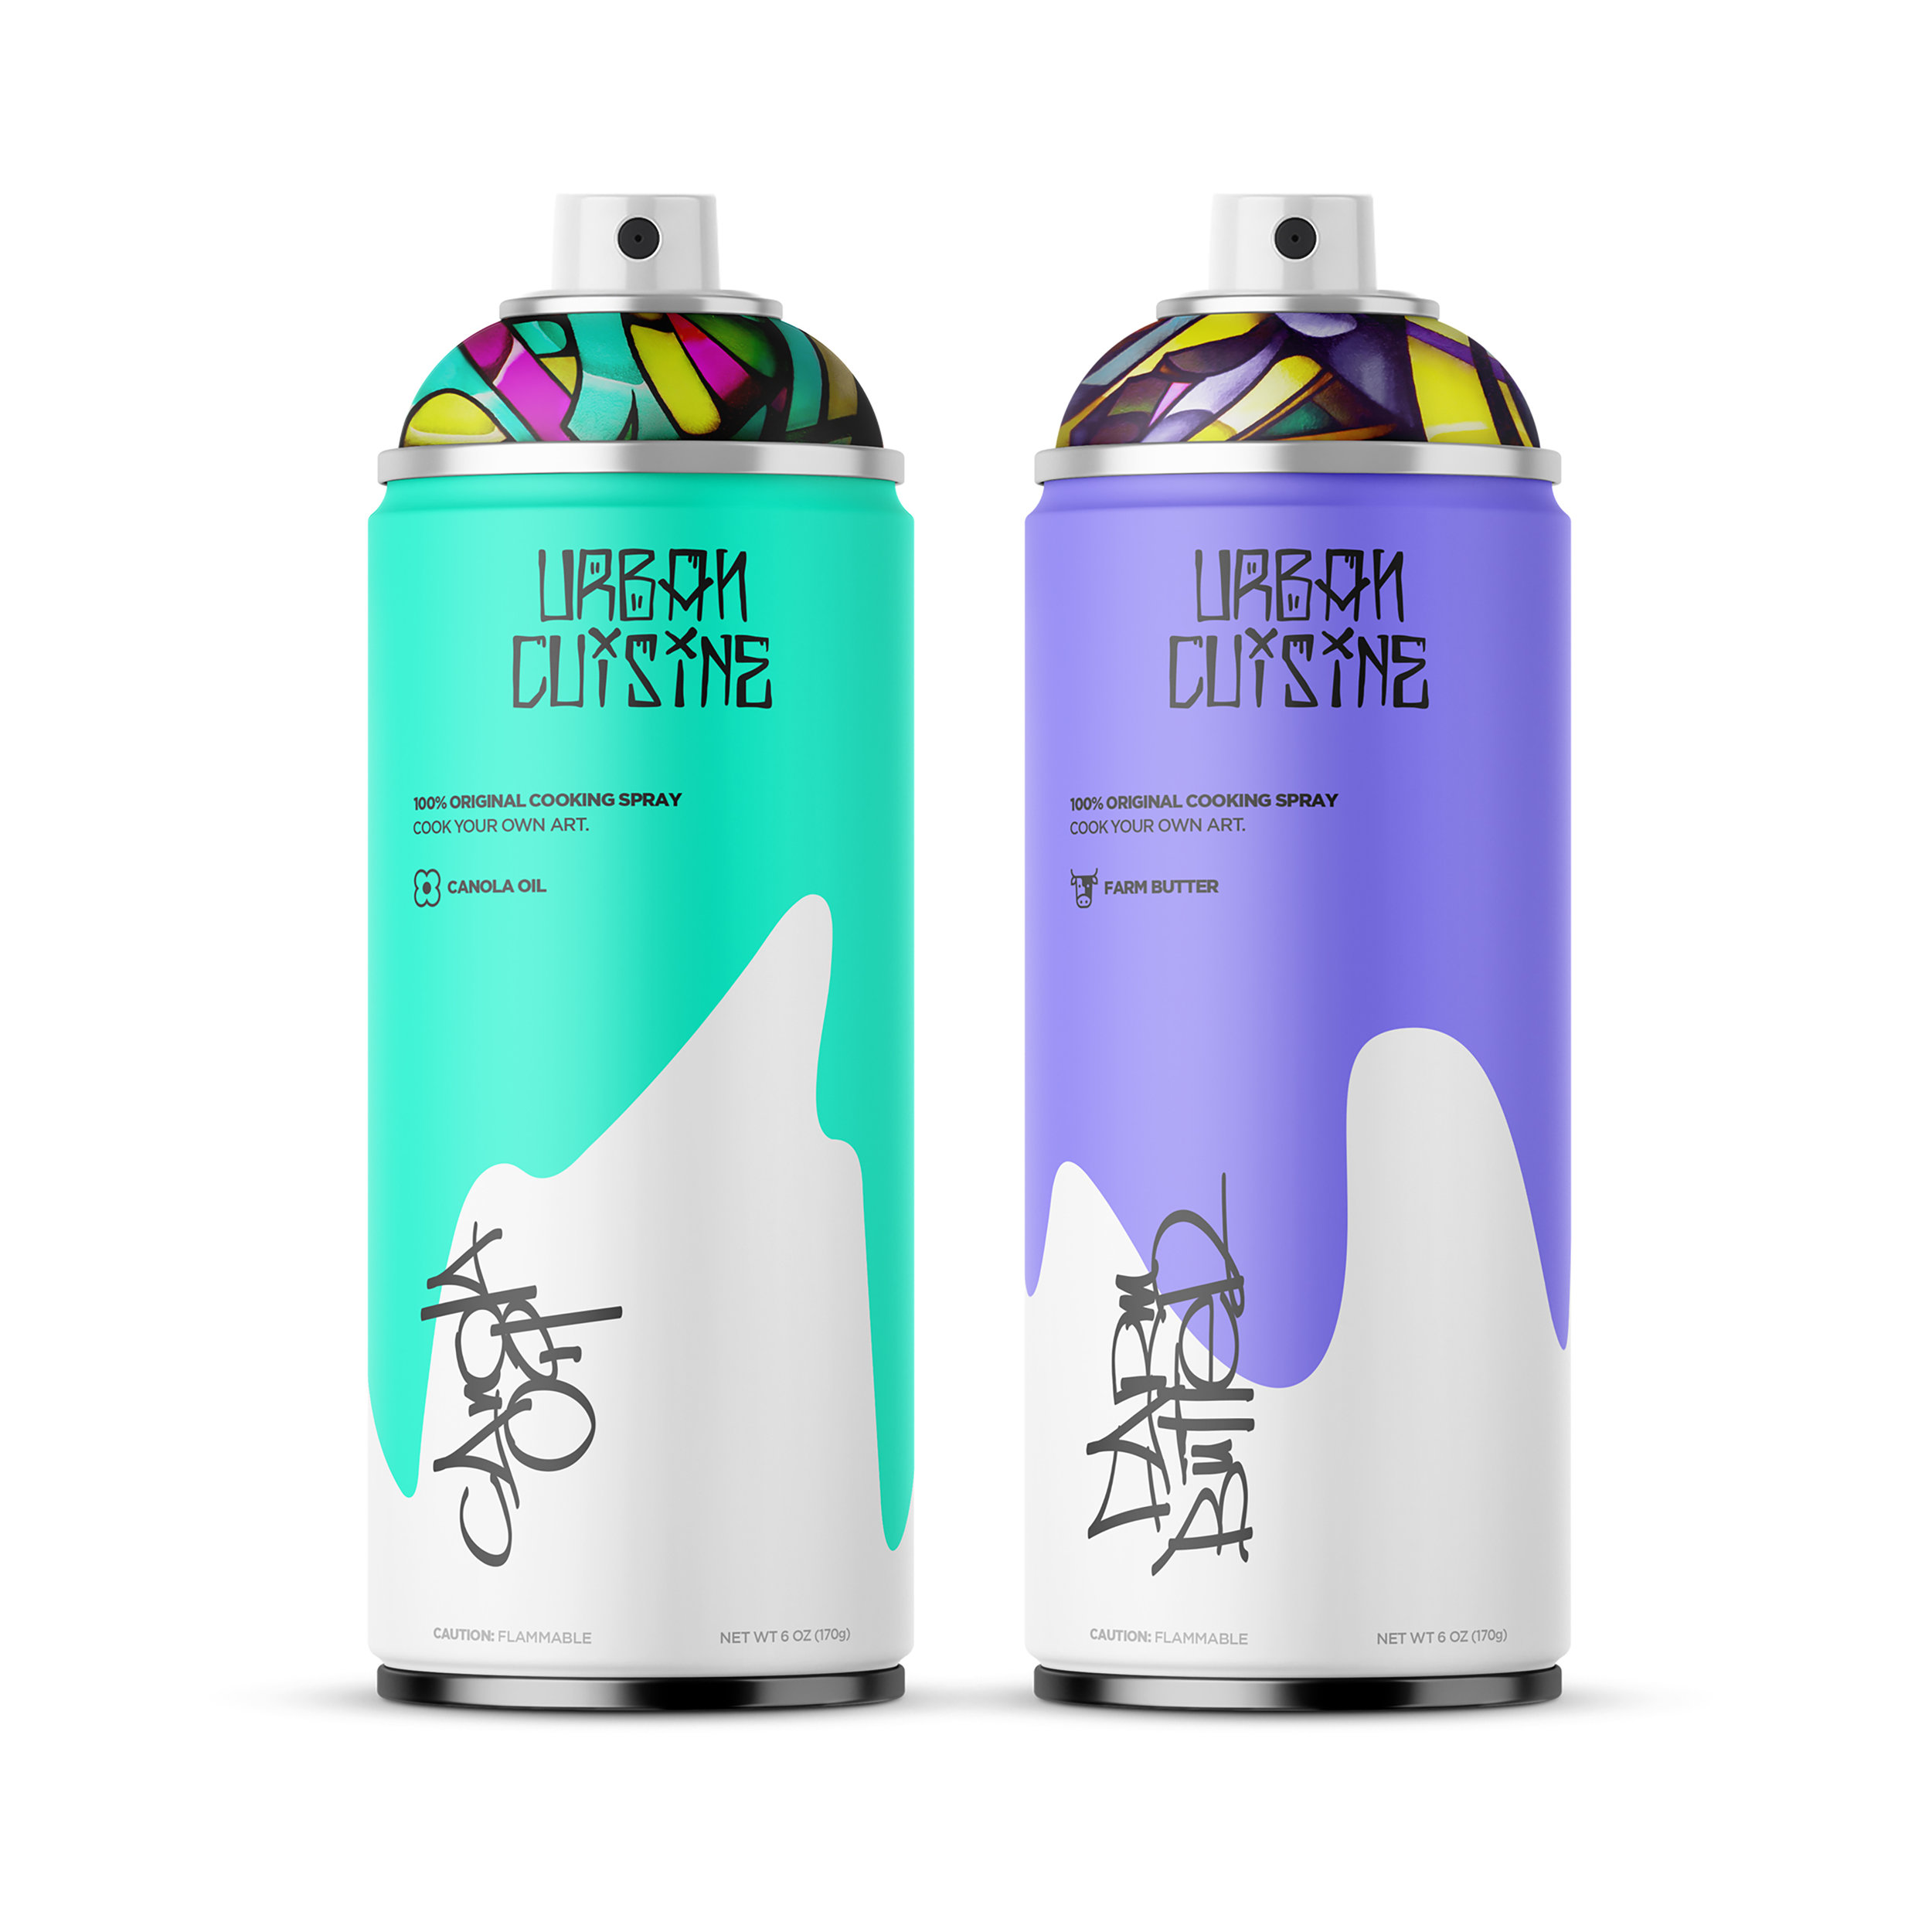 Award-winning Cooking Spray Packaging for Urban Cuisine